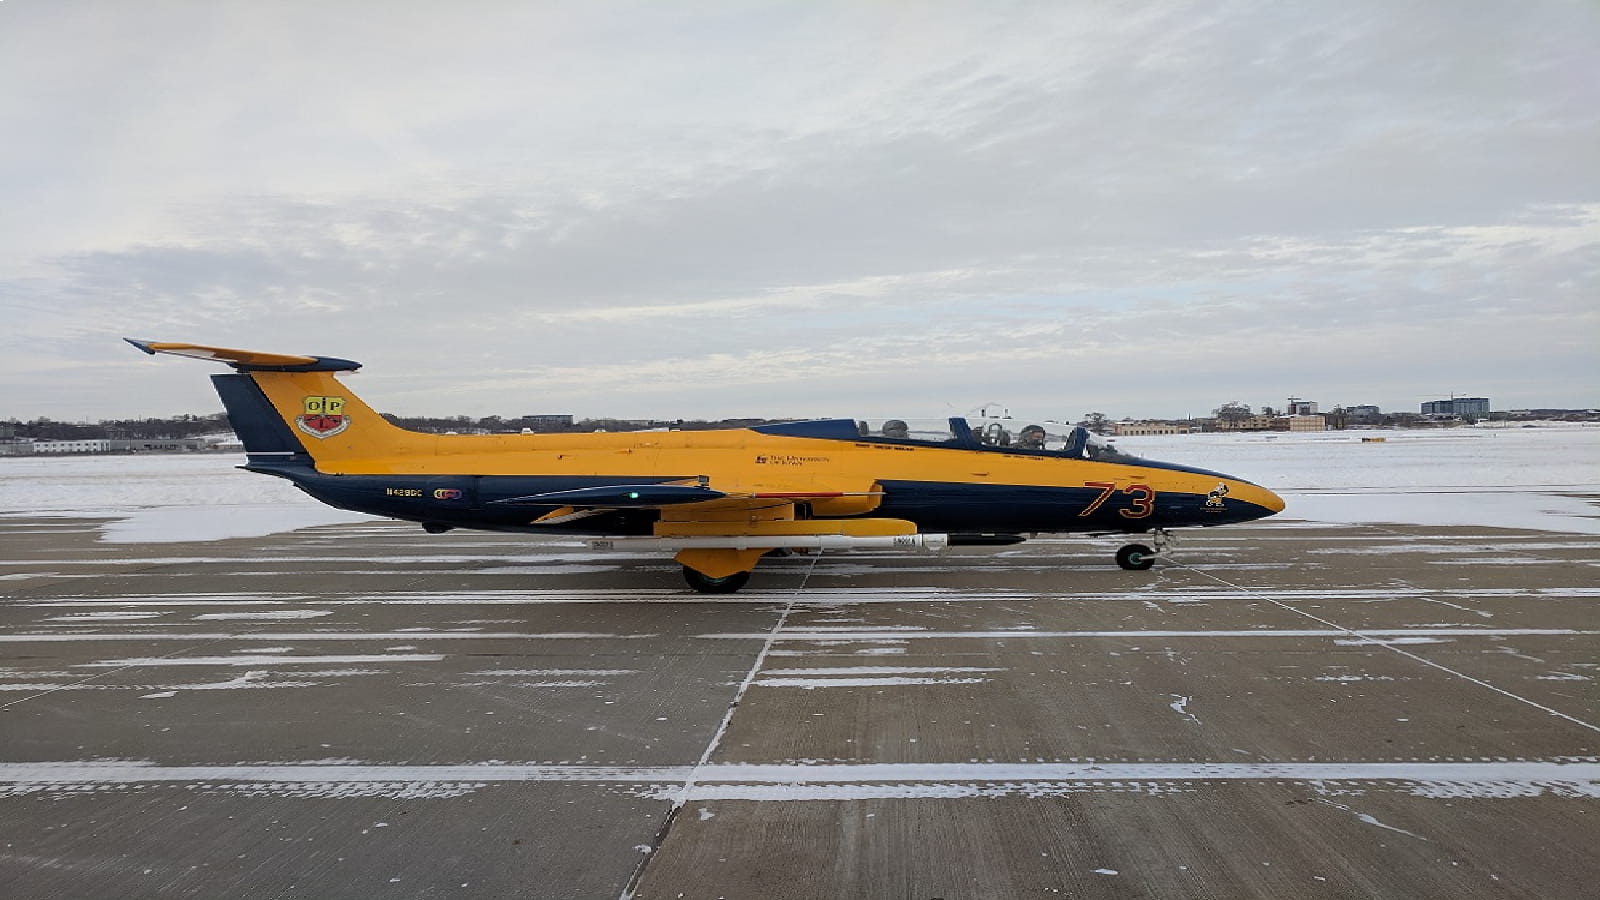 Yellow plane on snowy runway